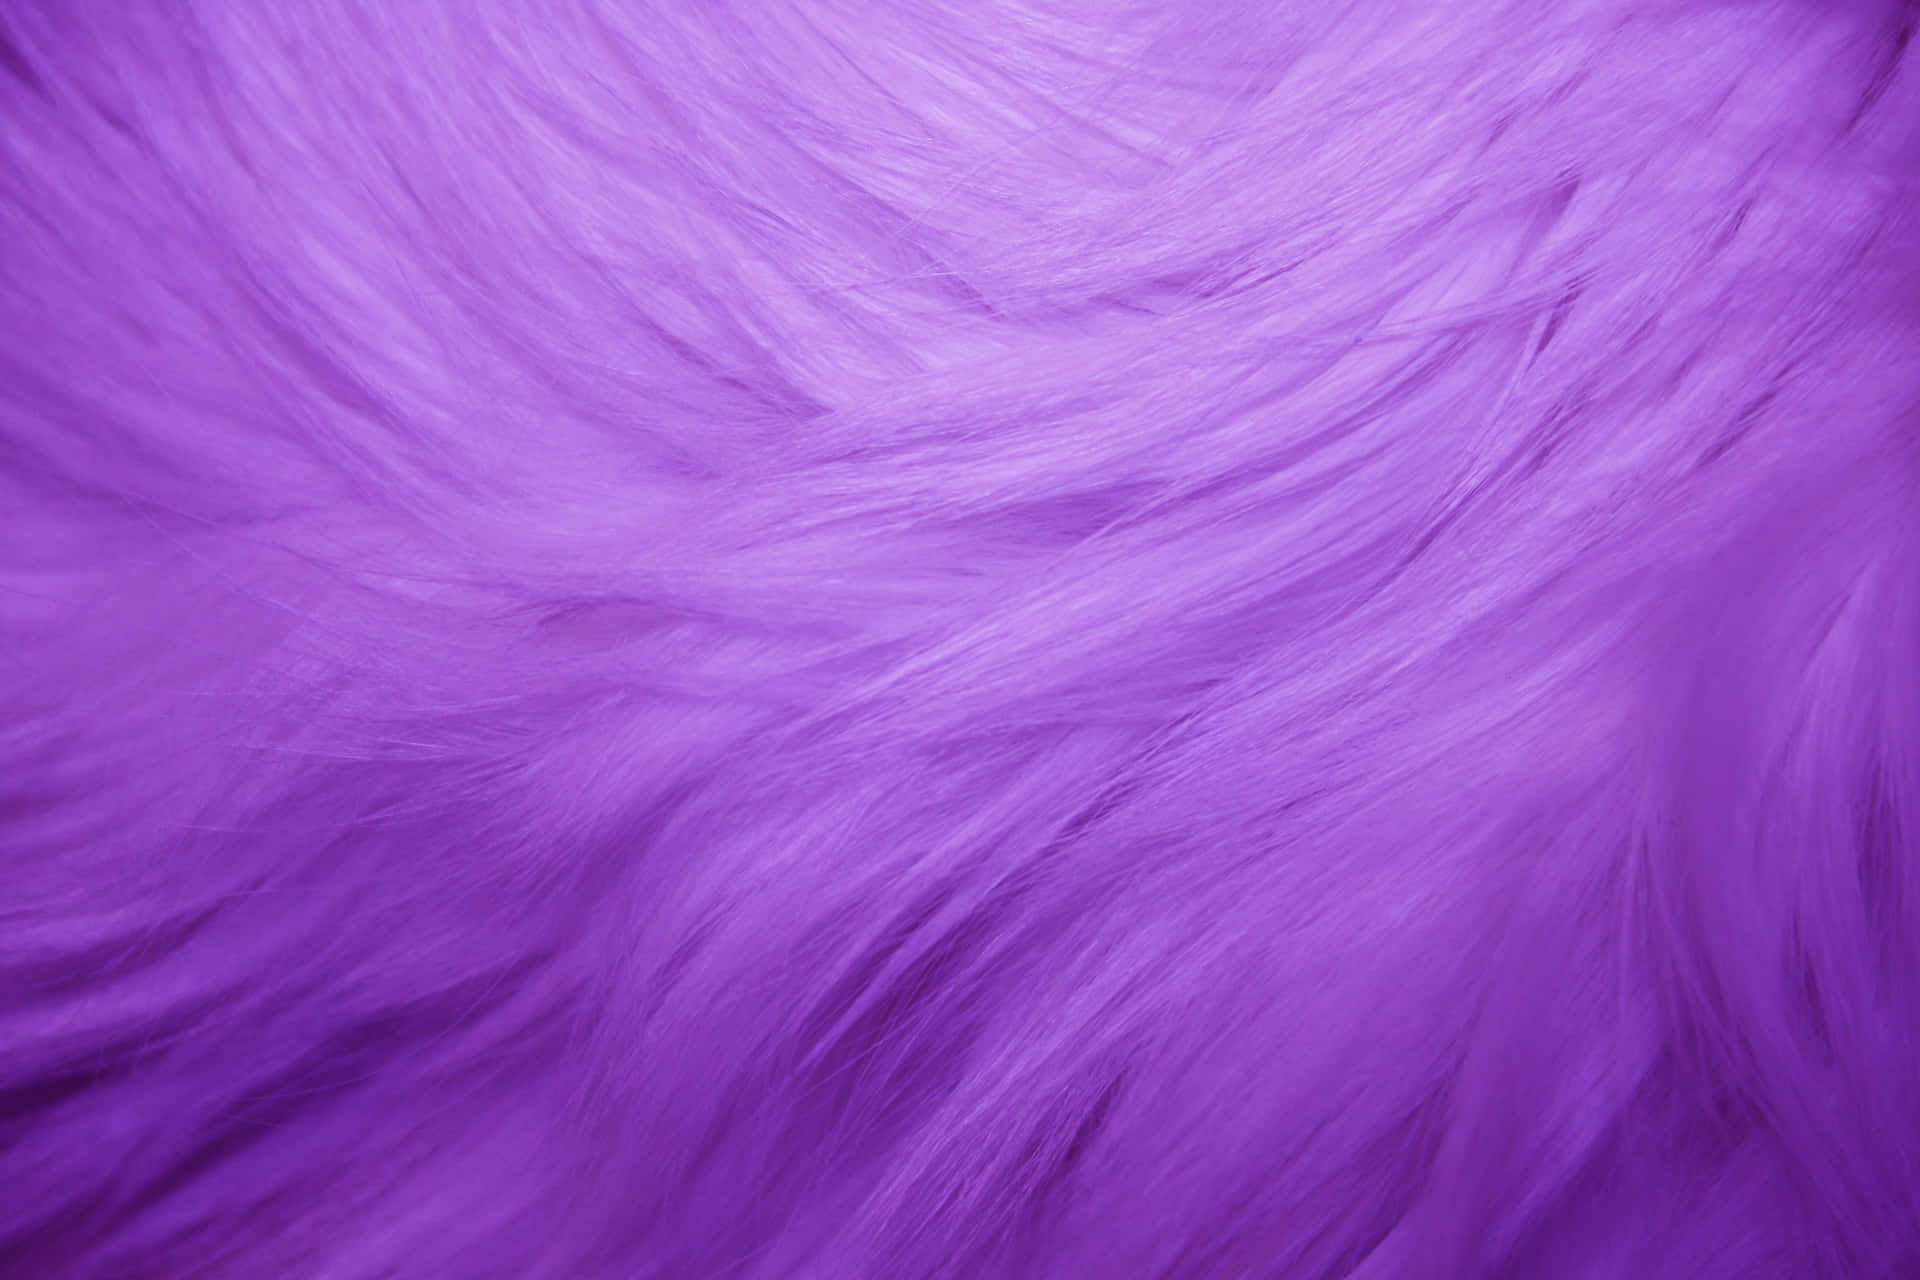 Soft and Stylish Purple Fur Wallpaper